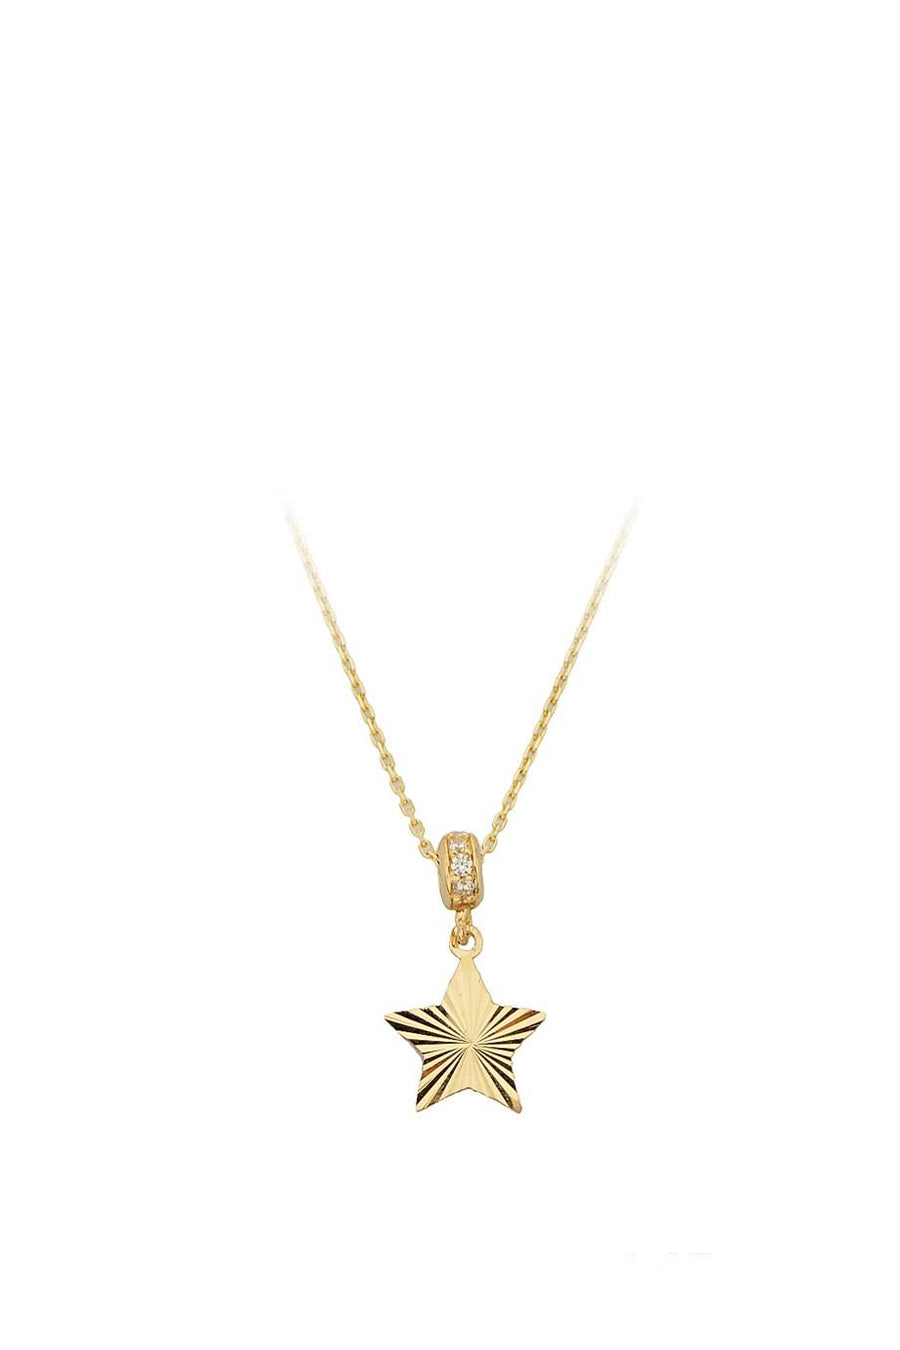 Golden Star Necklace